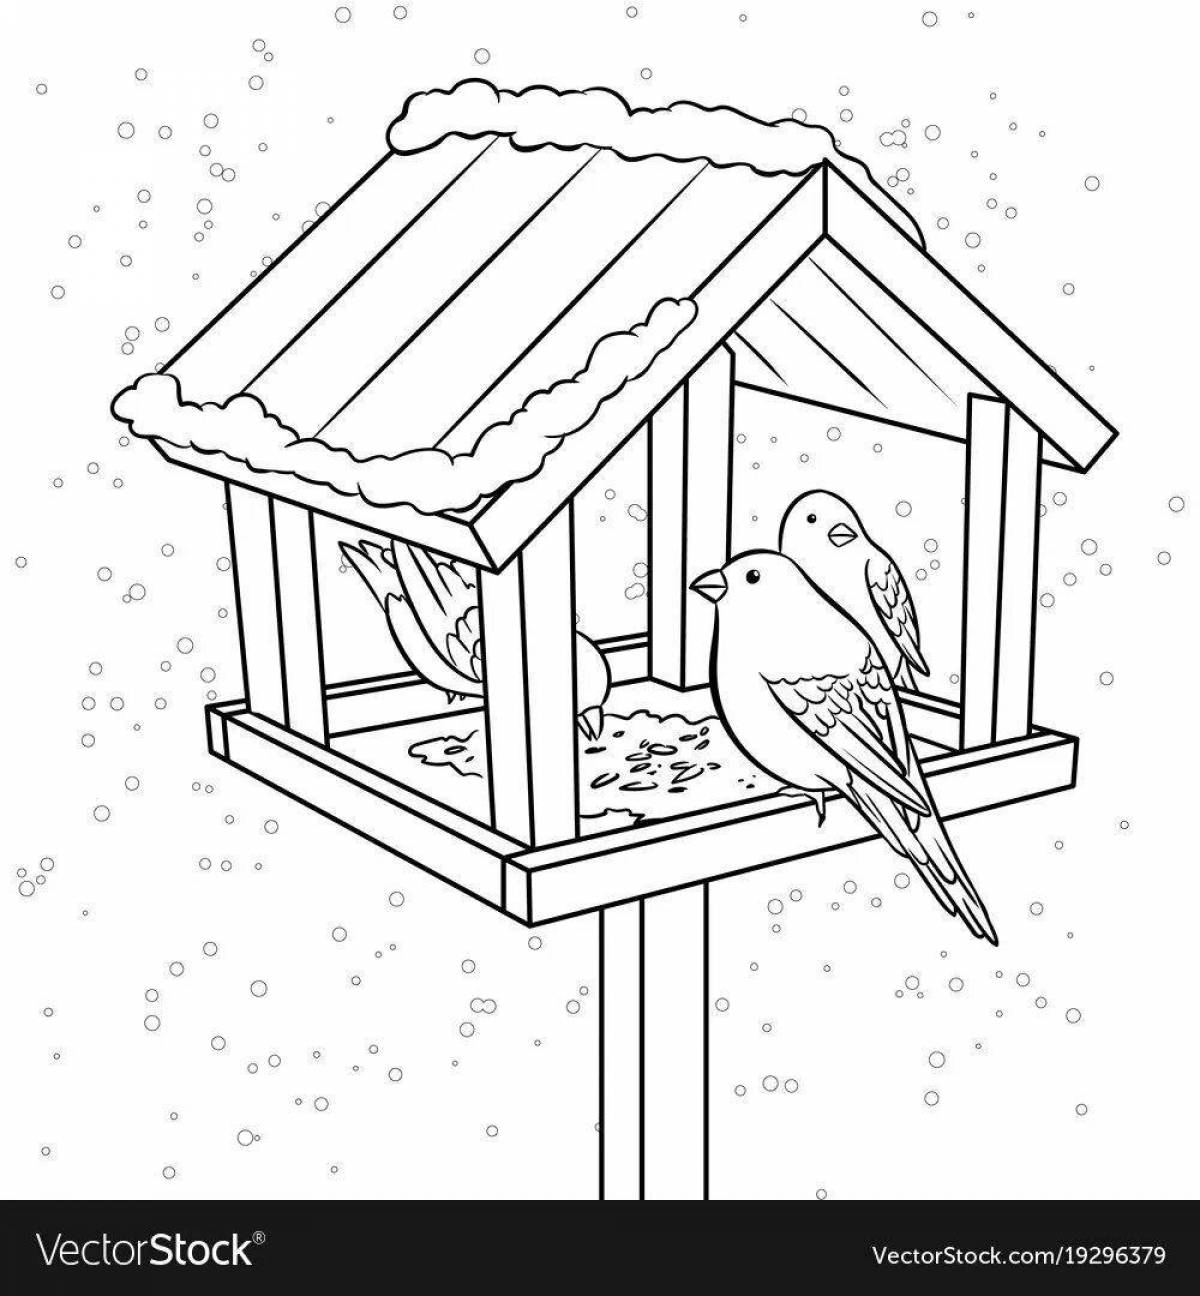 Coloring page dazzling bird feeder